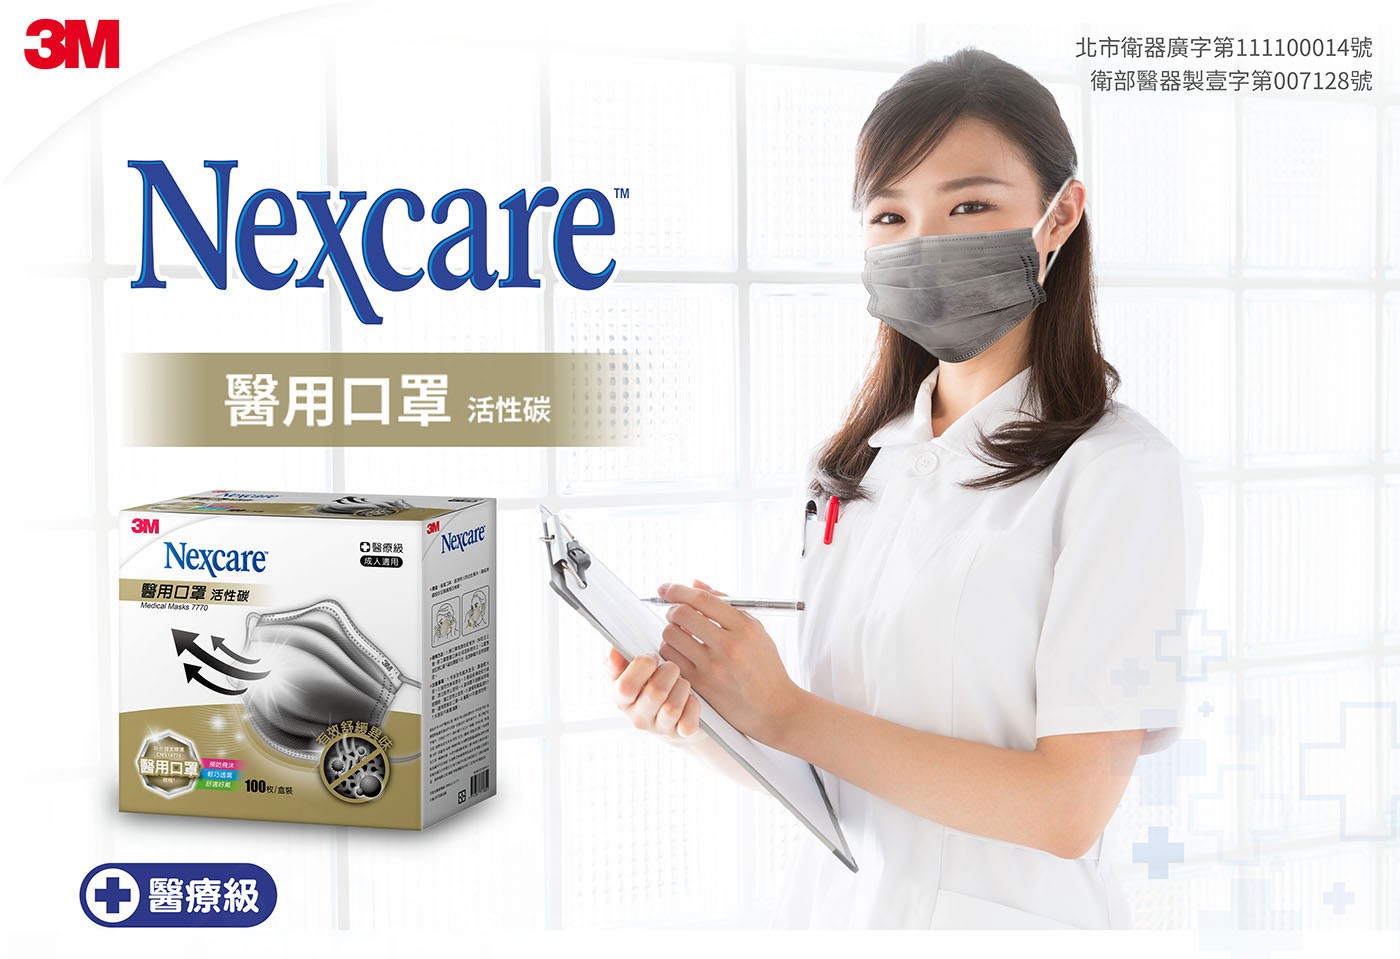 3M Nexcare 醫用活性碳口罩預防飛沫感染，細菌過濾效率高達99%，符合醫用口罩標準，呼吸順暢不悶熱。